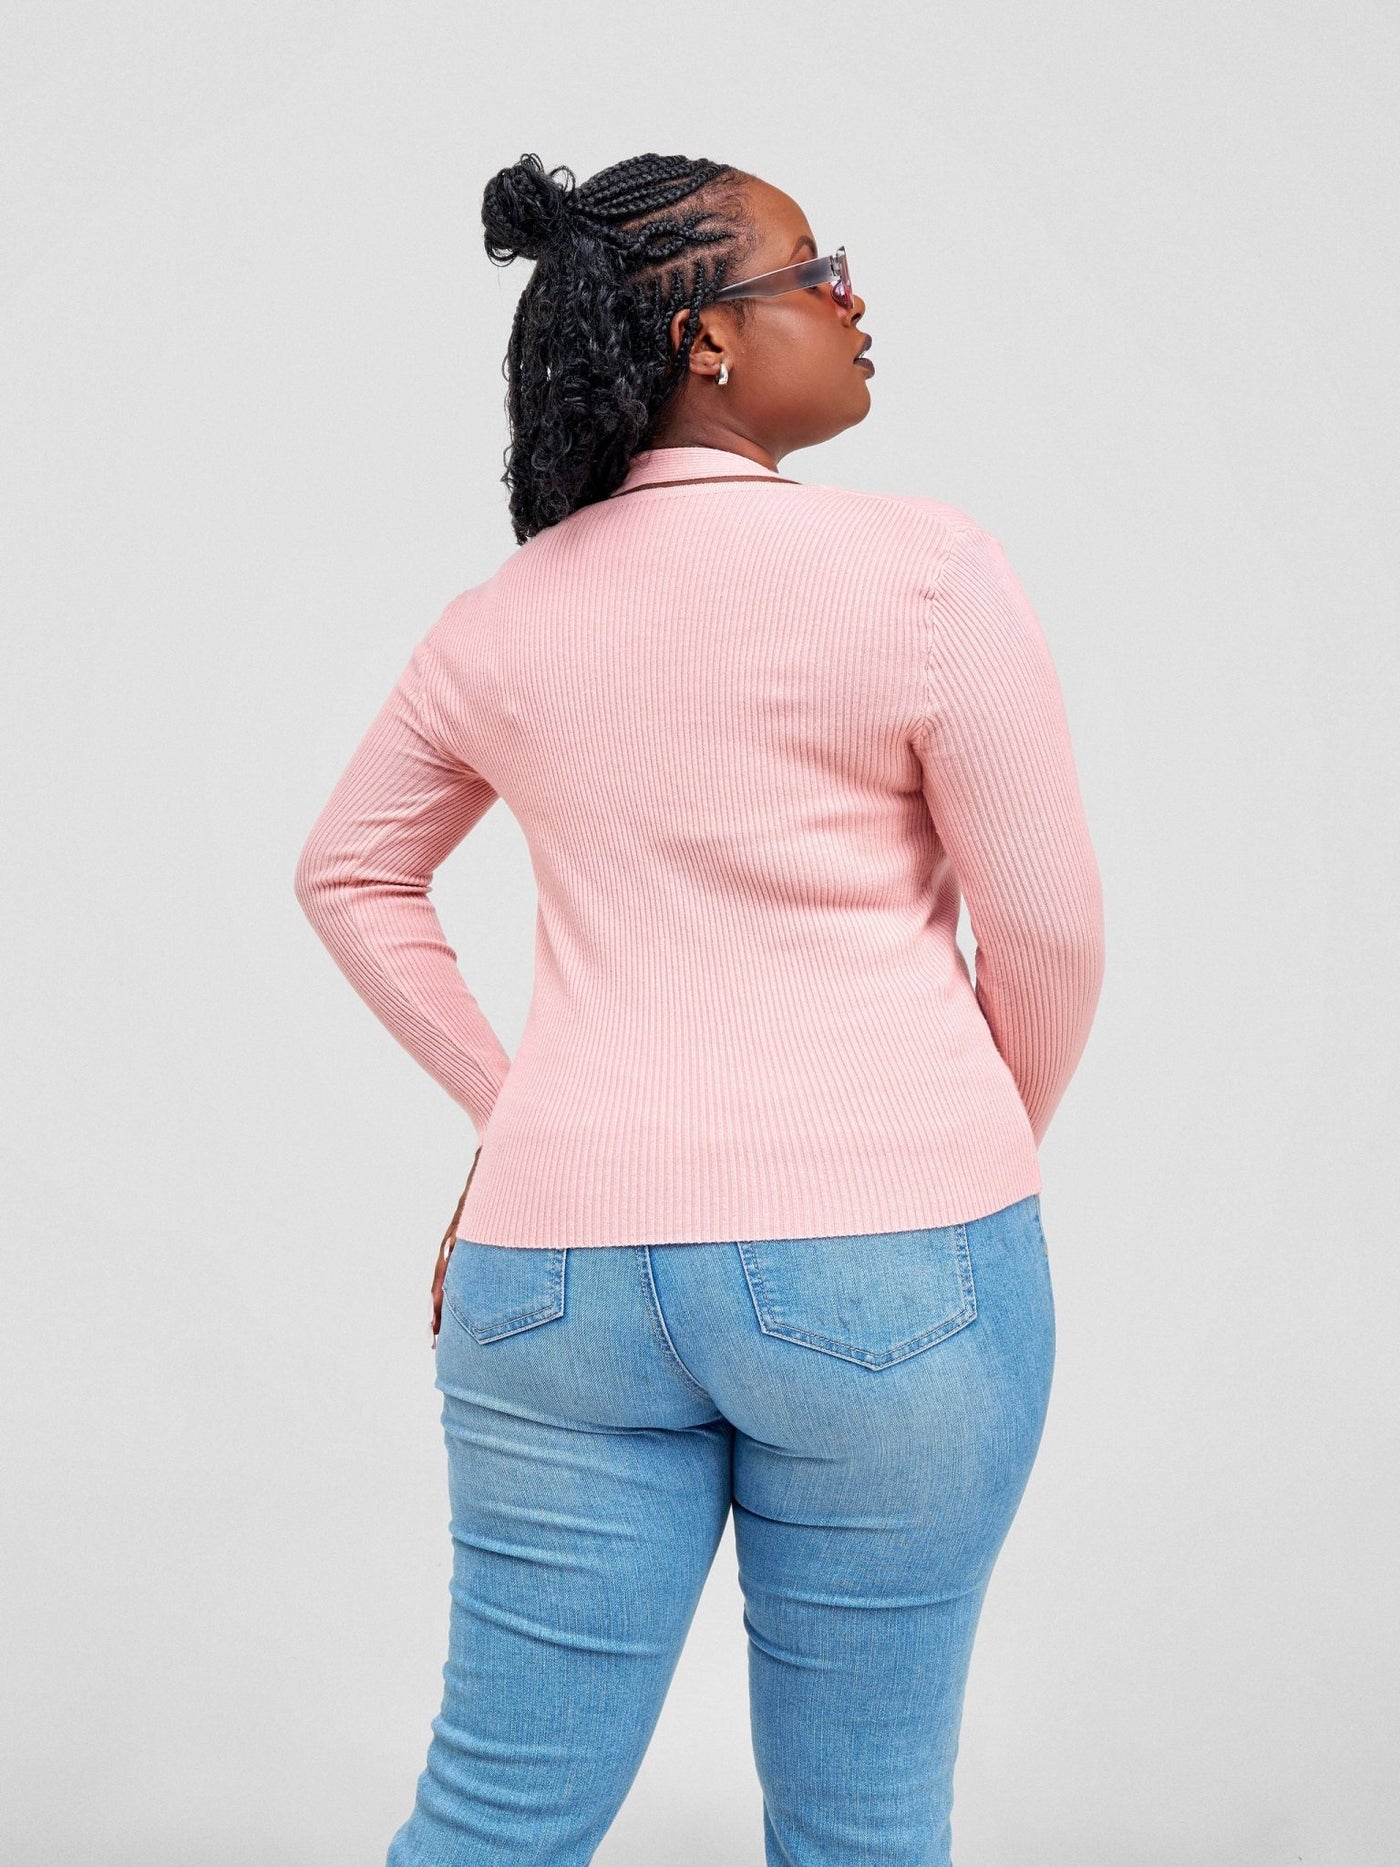 Anika Long Sleeved Sweater Top With Halter Neck Design - Pink - Shopzetu